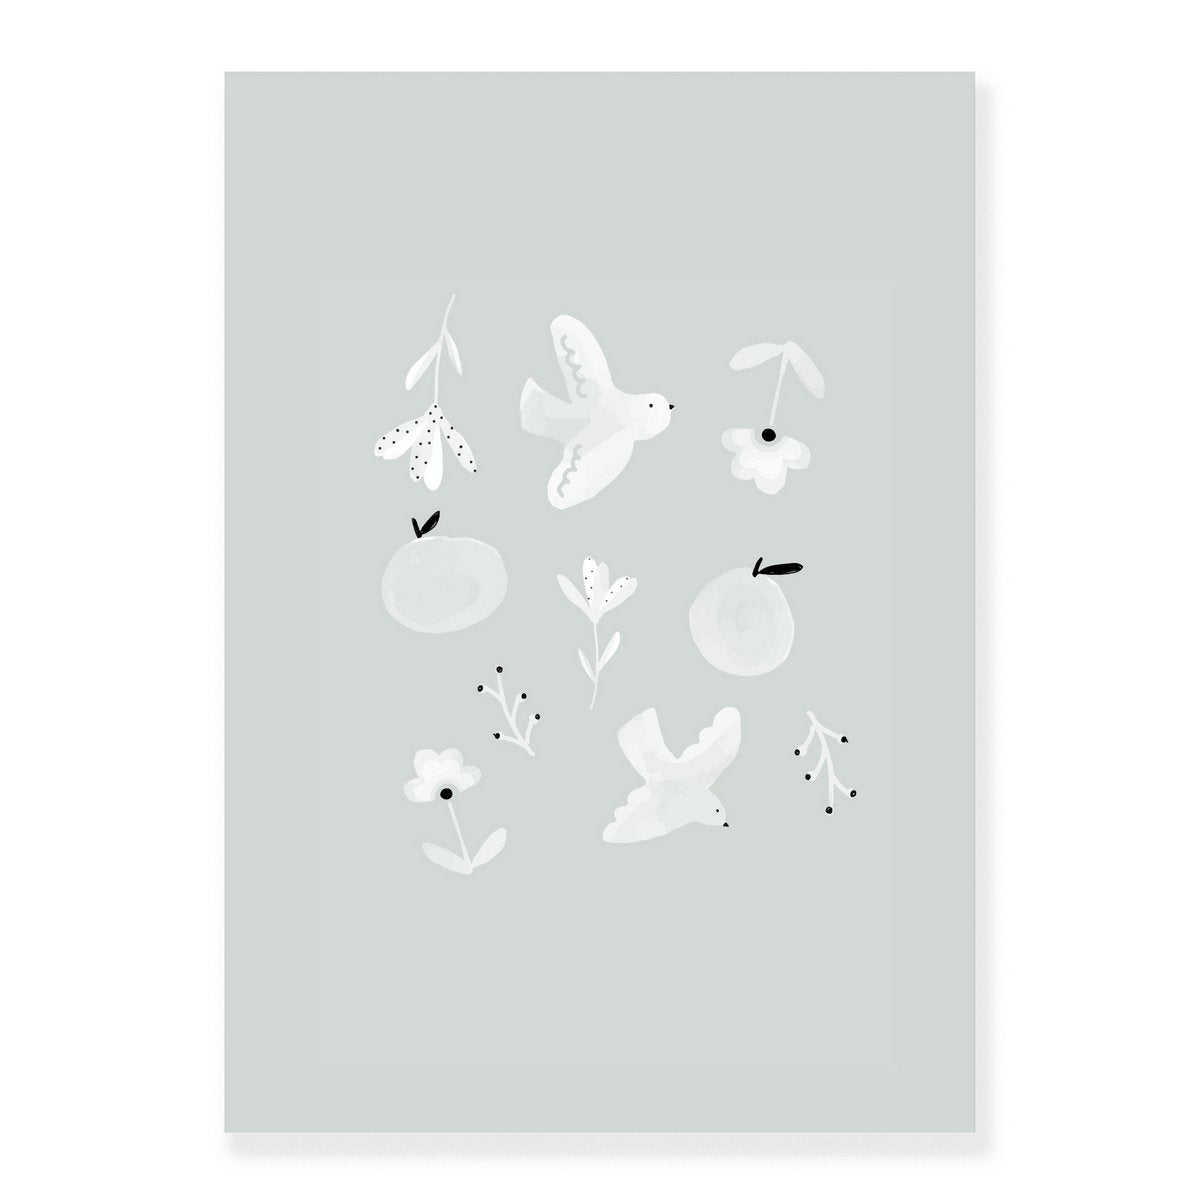 Poster "Linnud ja lilled" - A3 (42 cm x 29,7cm)